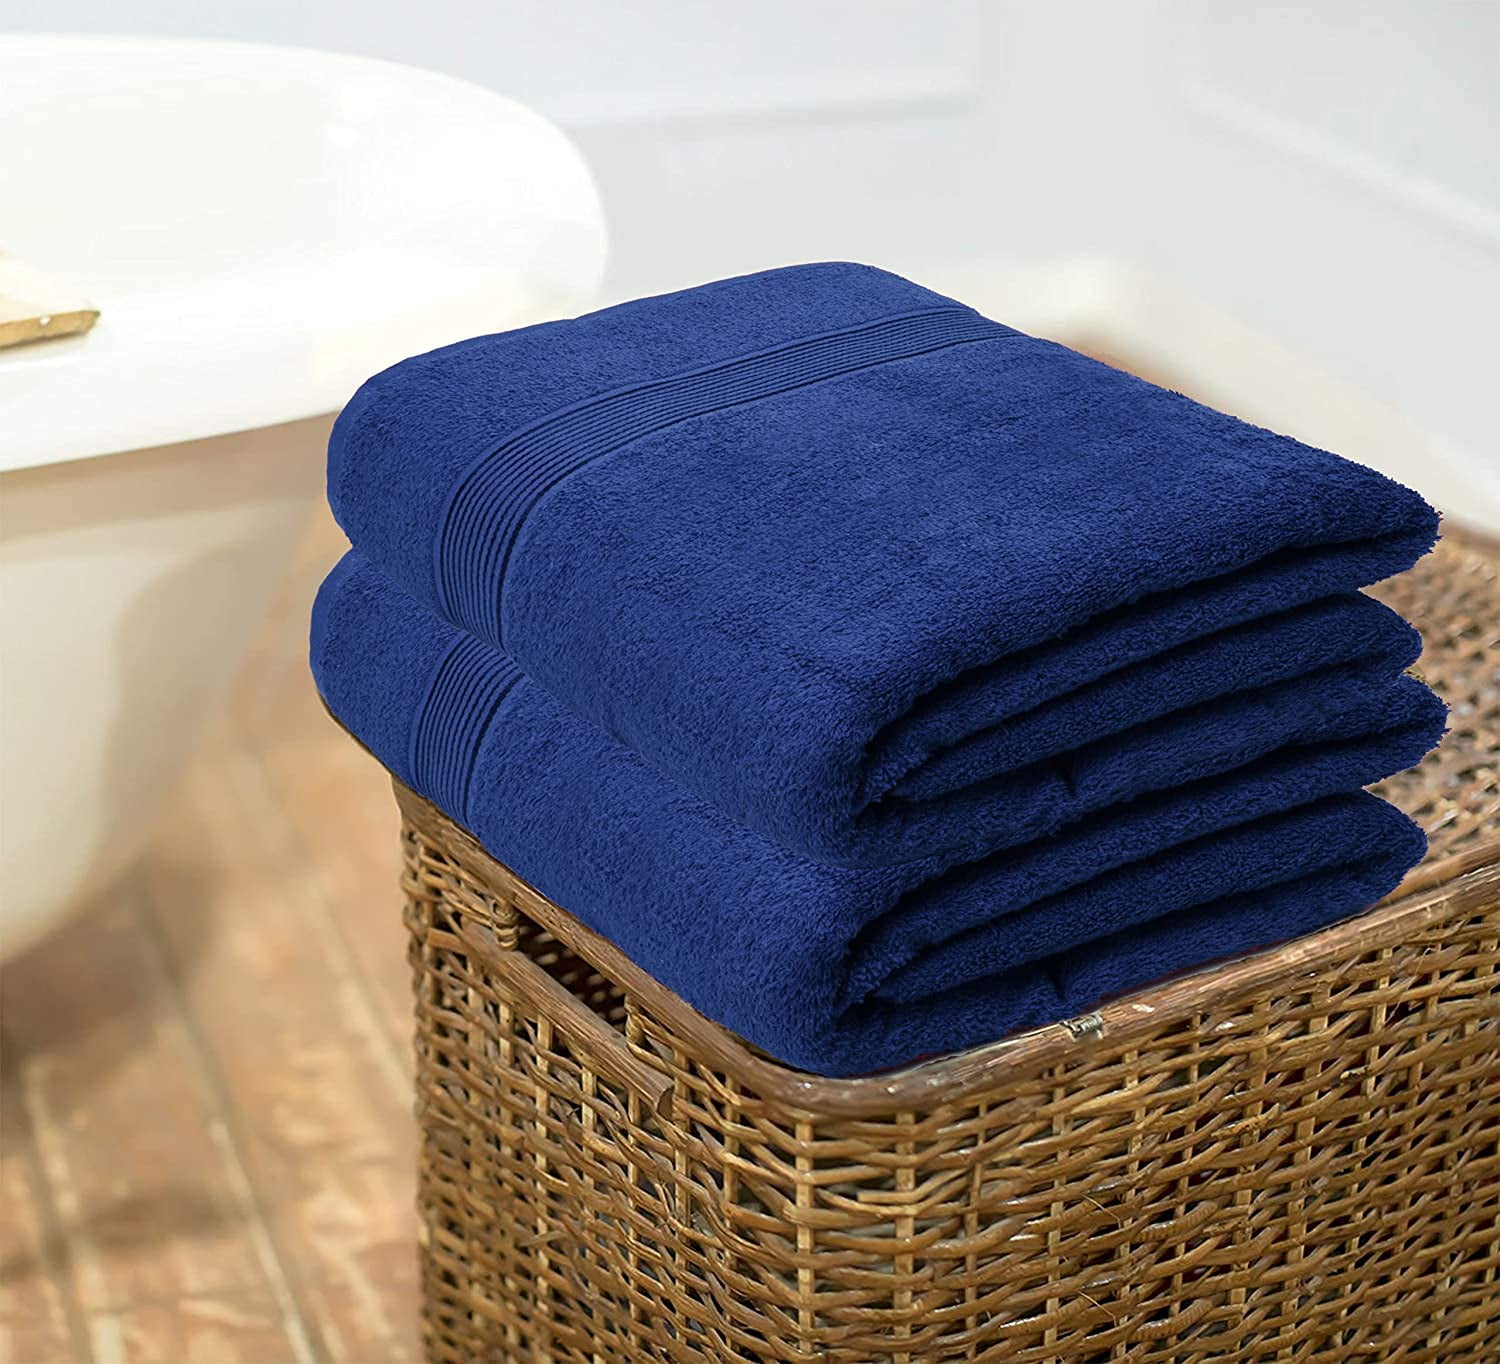 Mejores ofertas e historial de precios de BELIZZI HOME Ultra Soft 6 Pack  Cotton Towel Set, Contains 2 Bath Towels 28x55 inch, 2 Hand Towels 16x24  inch & 2 Wash Coths 12x12